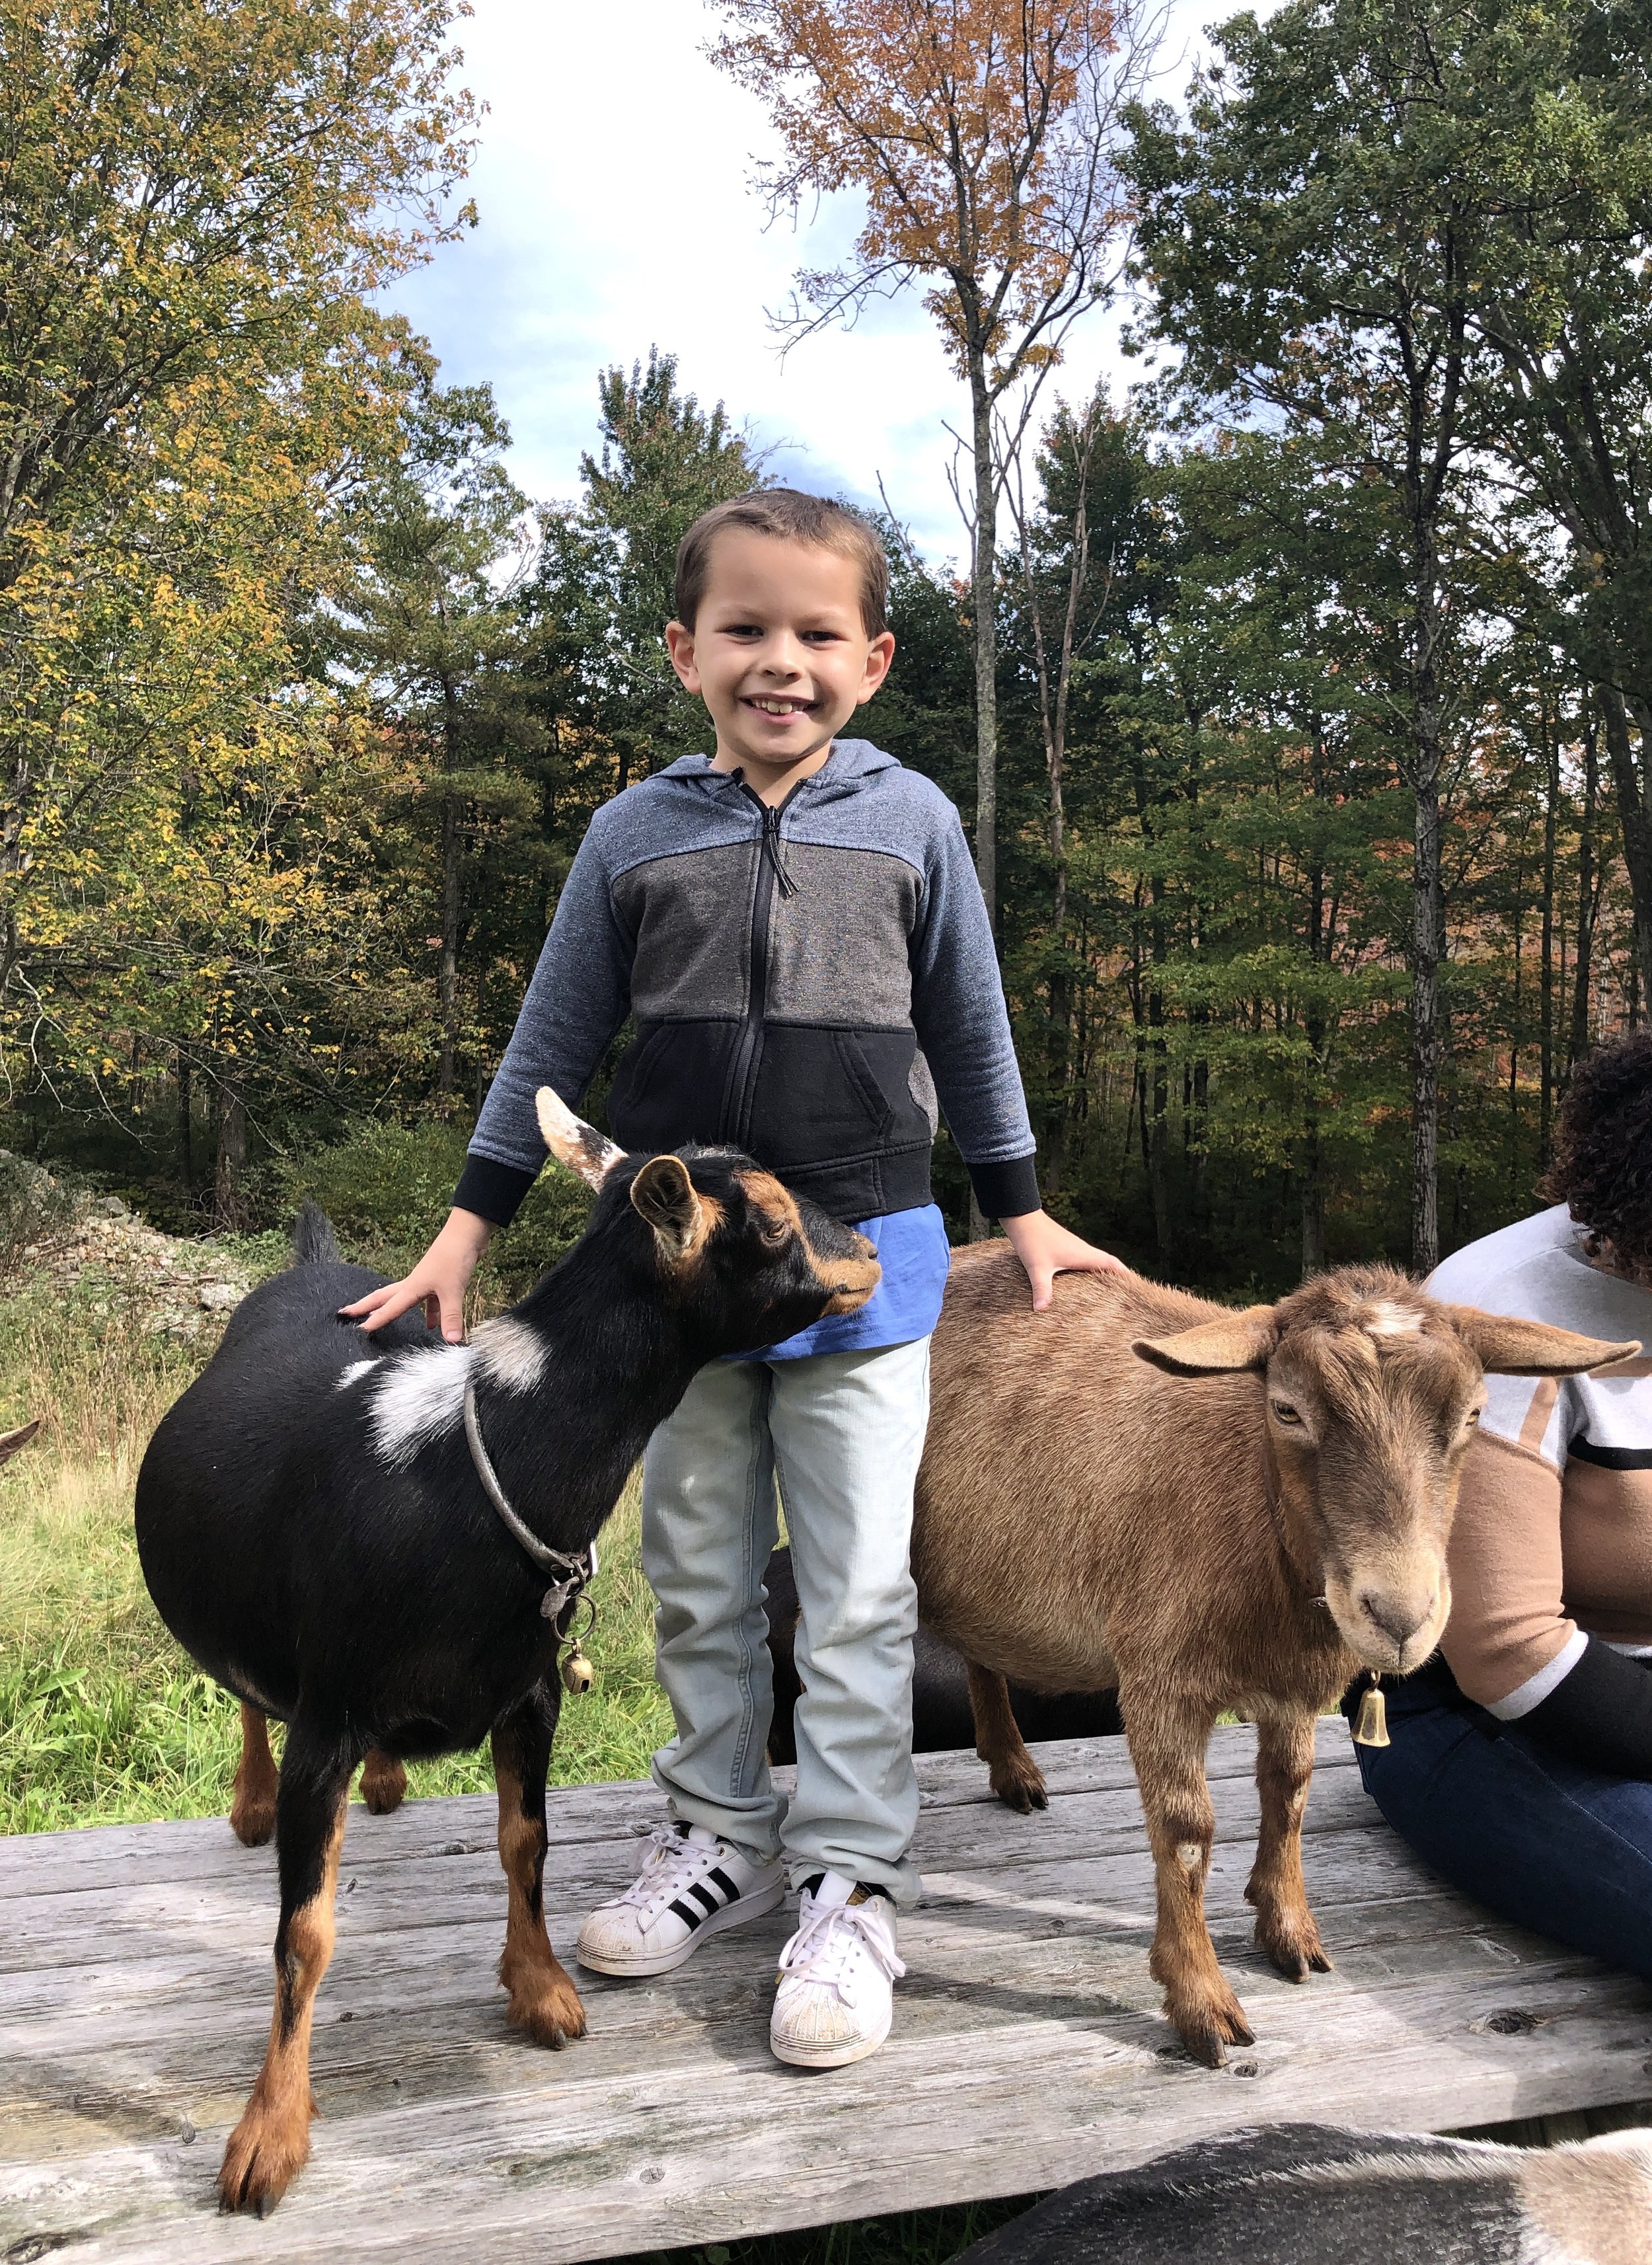 My nephew; Matty with Quinoa and Ersa - October 2021